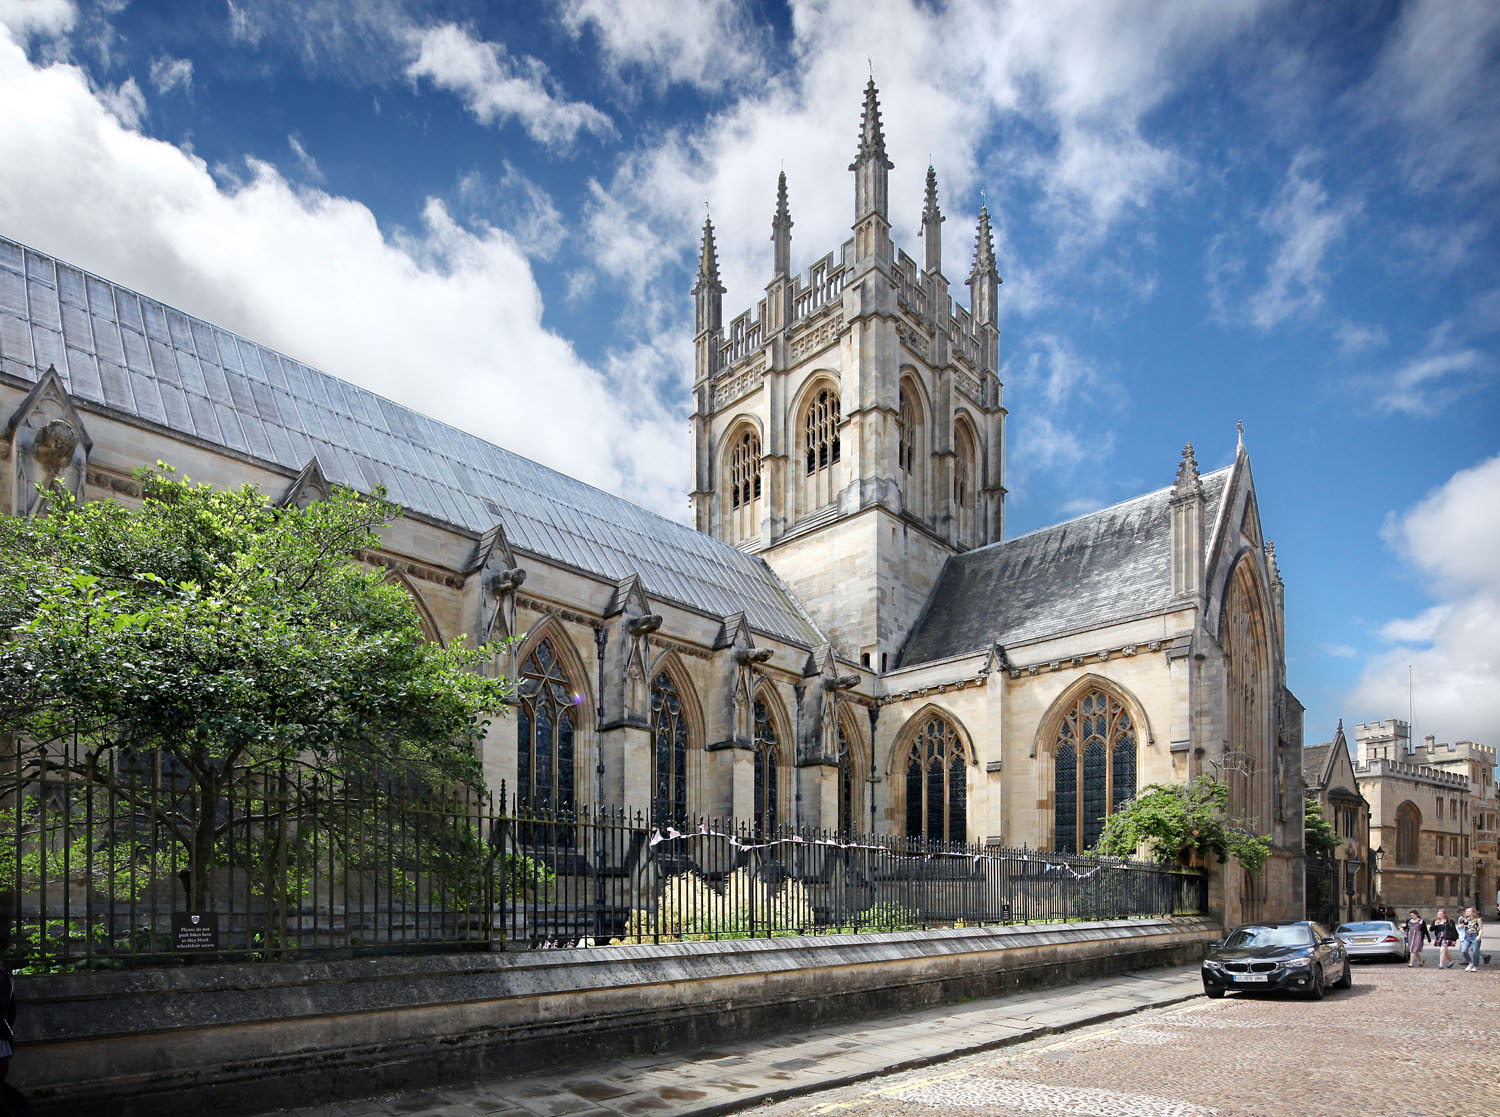 Merton College Chapel from Merton St. Oxford, UK